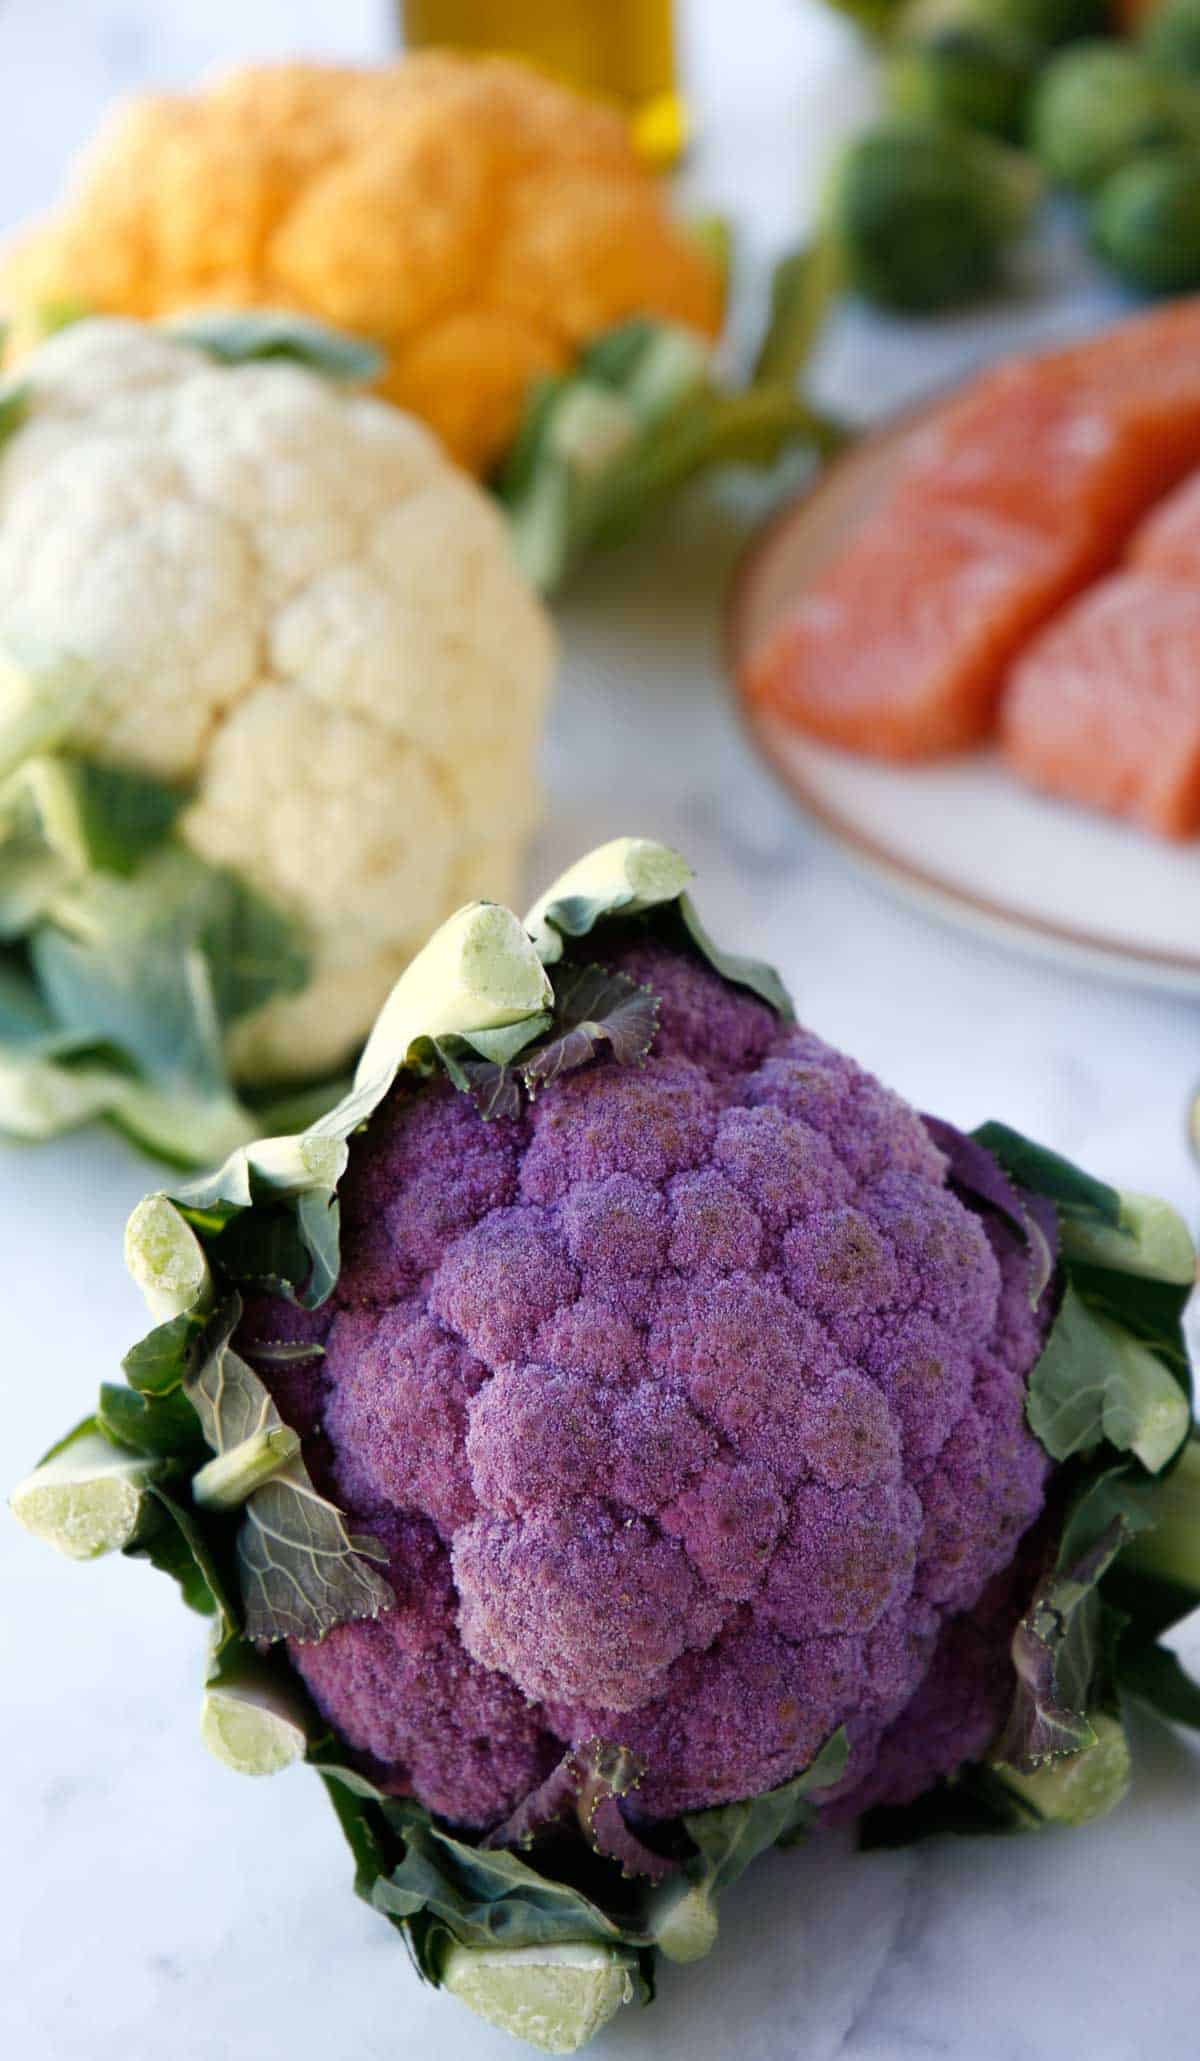 Purple,, White and Orange Cauliflower with Salmon on a Plate